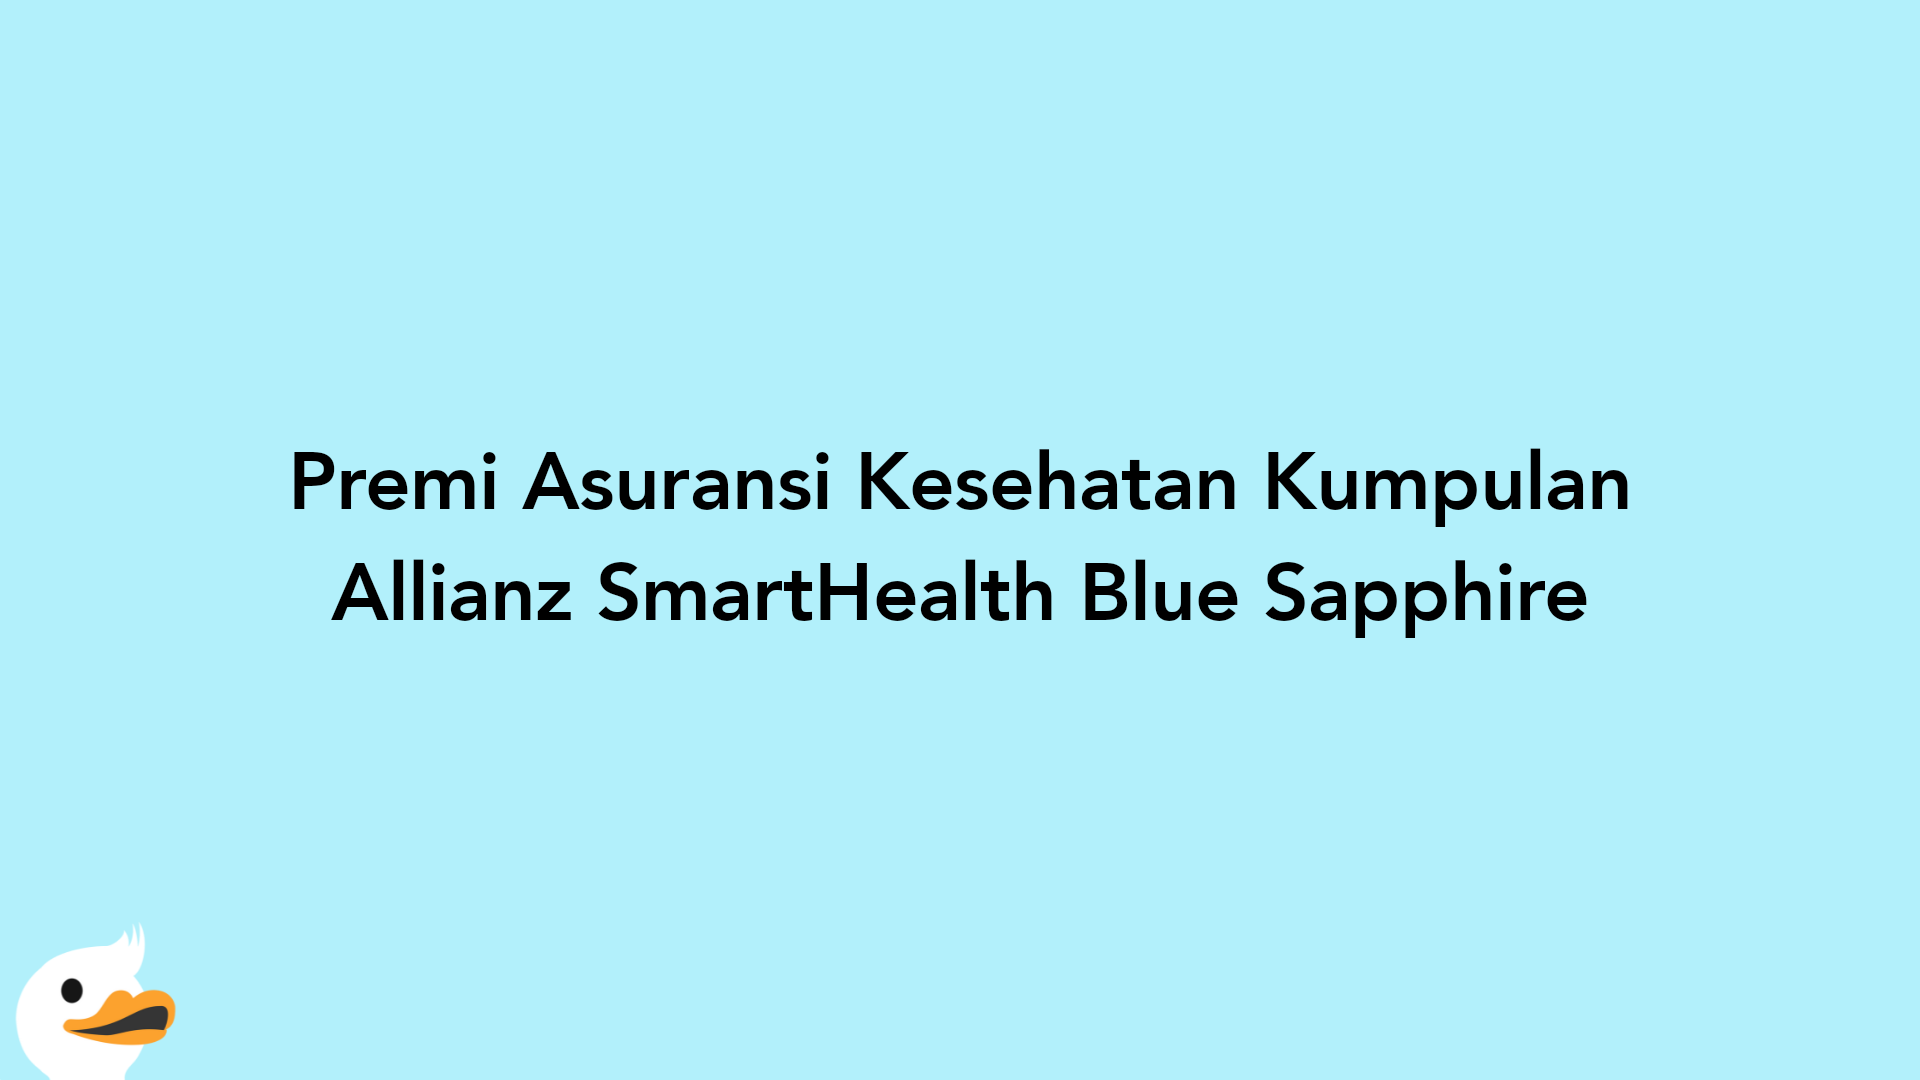 Premi Asuransi Kesehatan Kumpulan Allianz SmartHealth Blue Sapphire